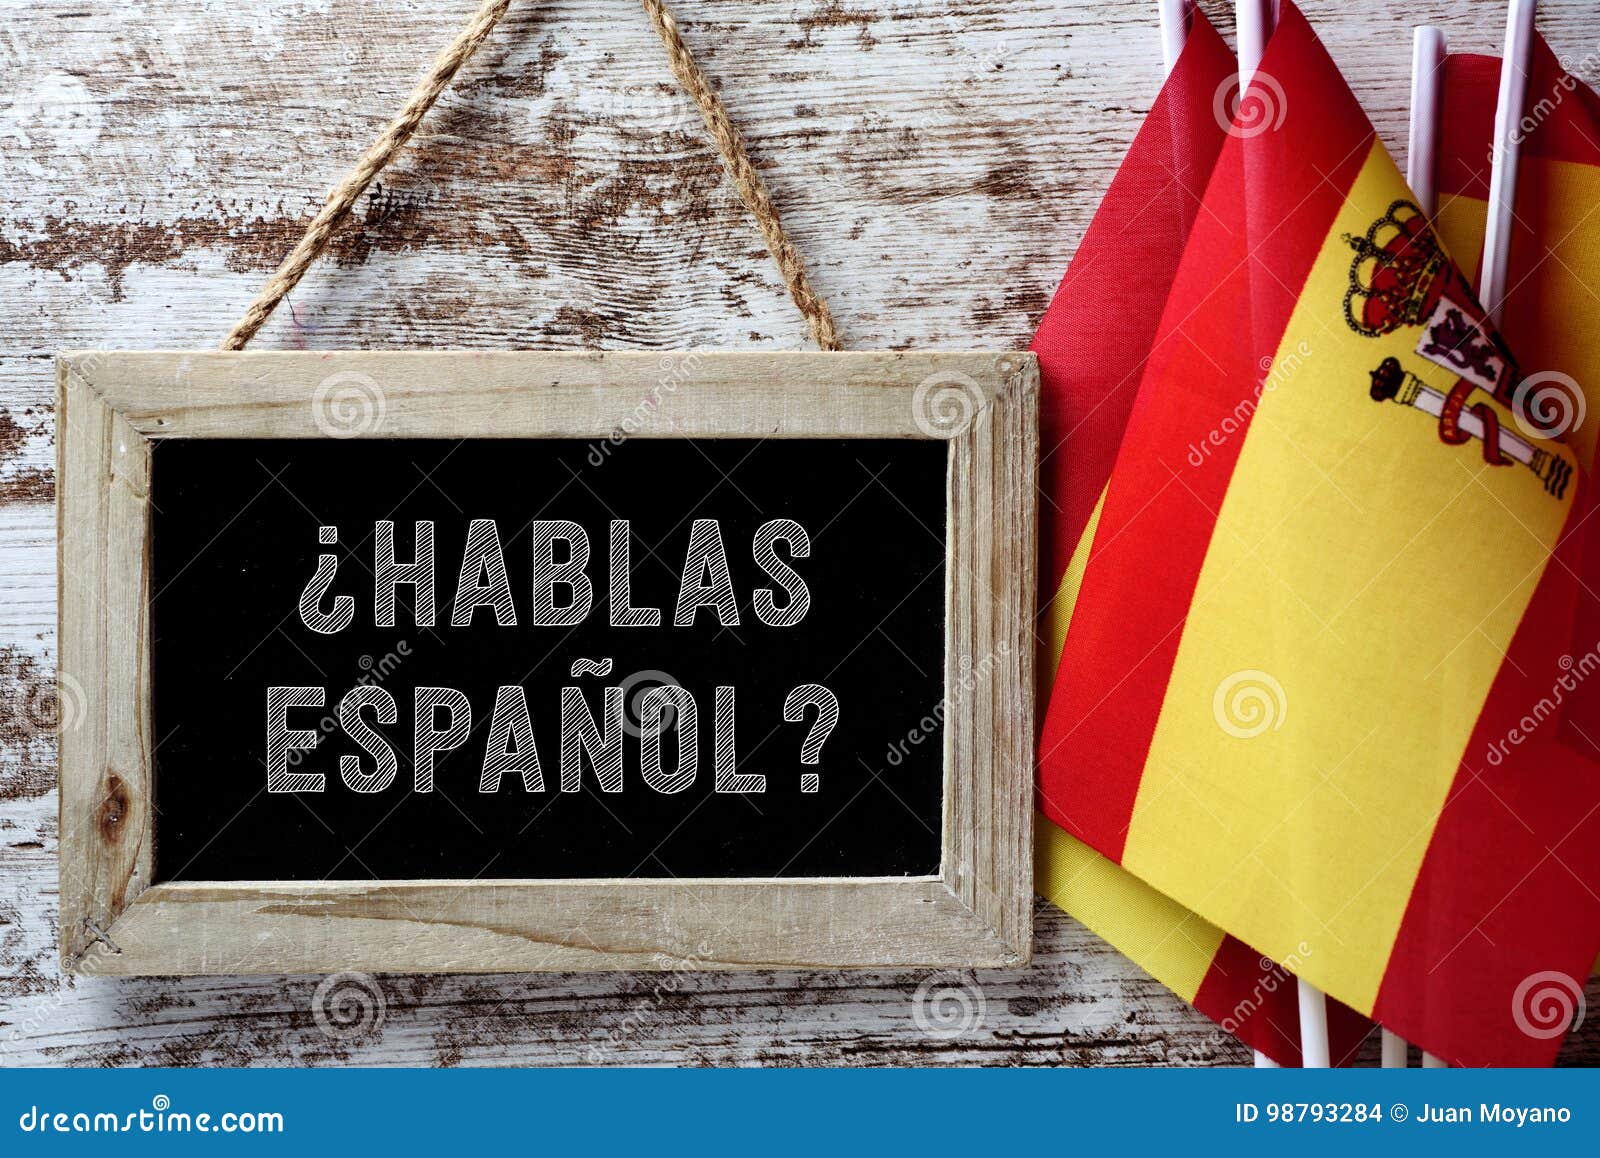 question hablas espanol? do you speak spanish?